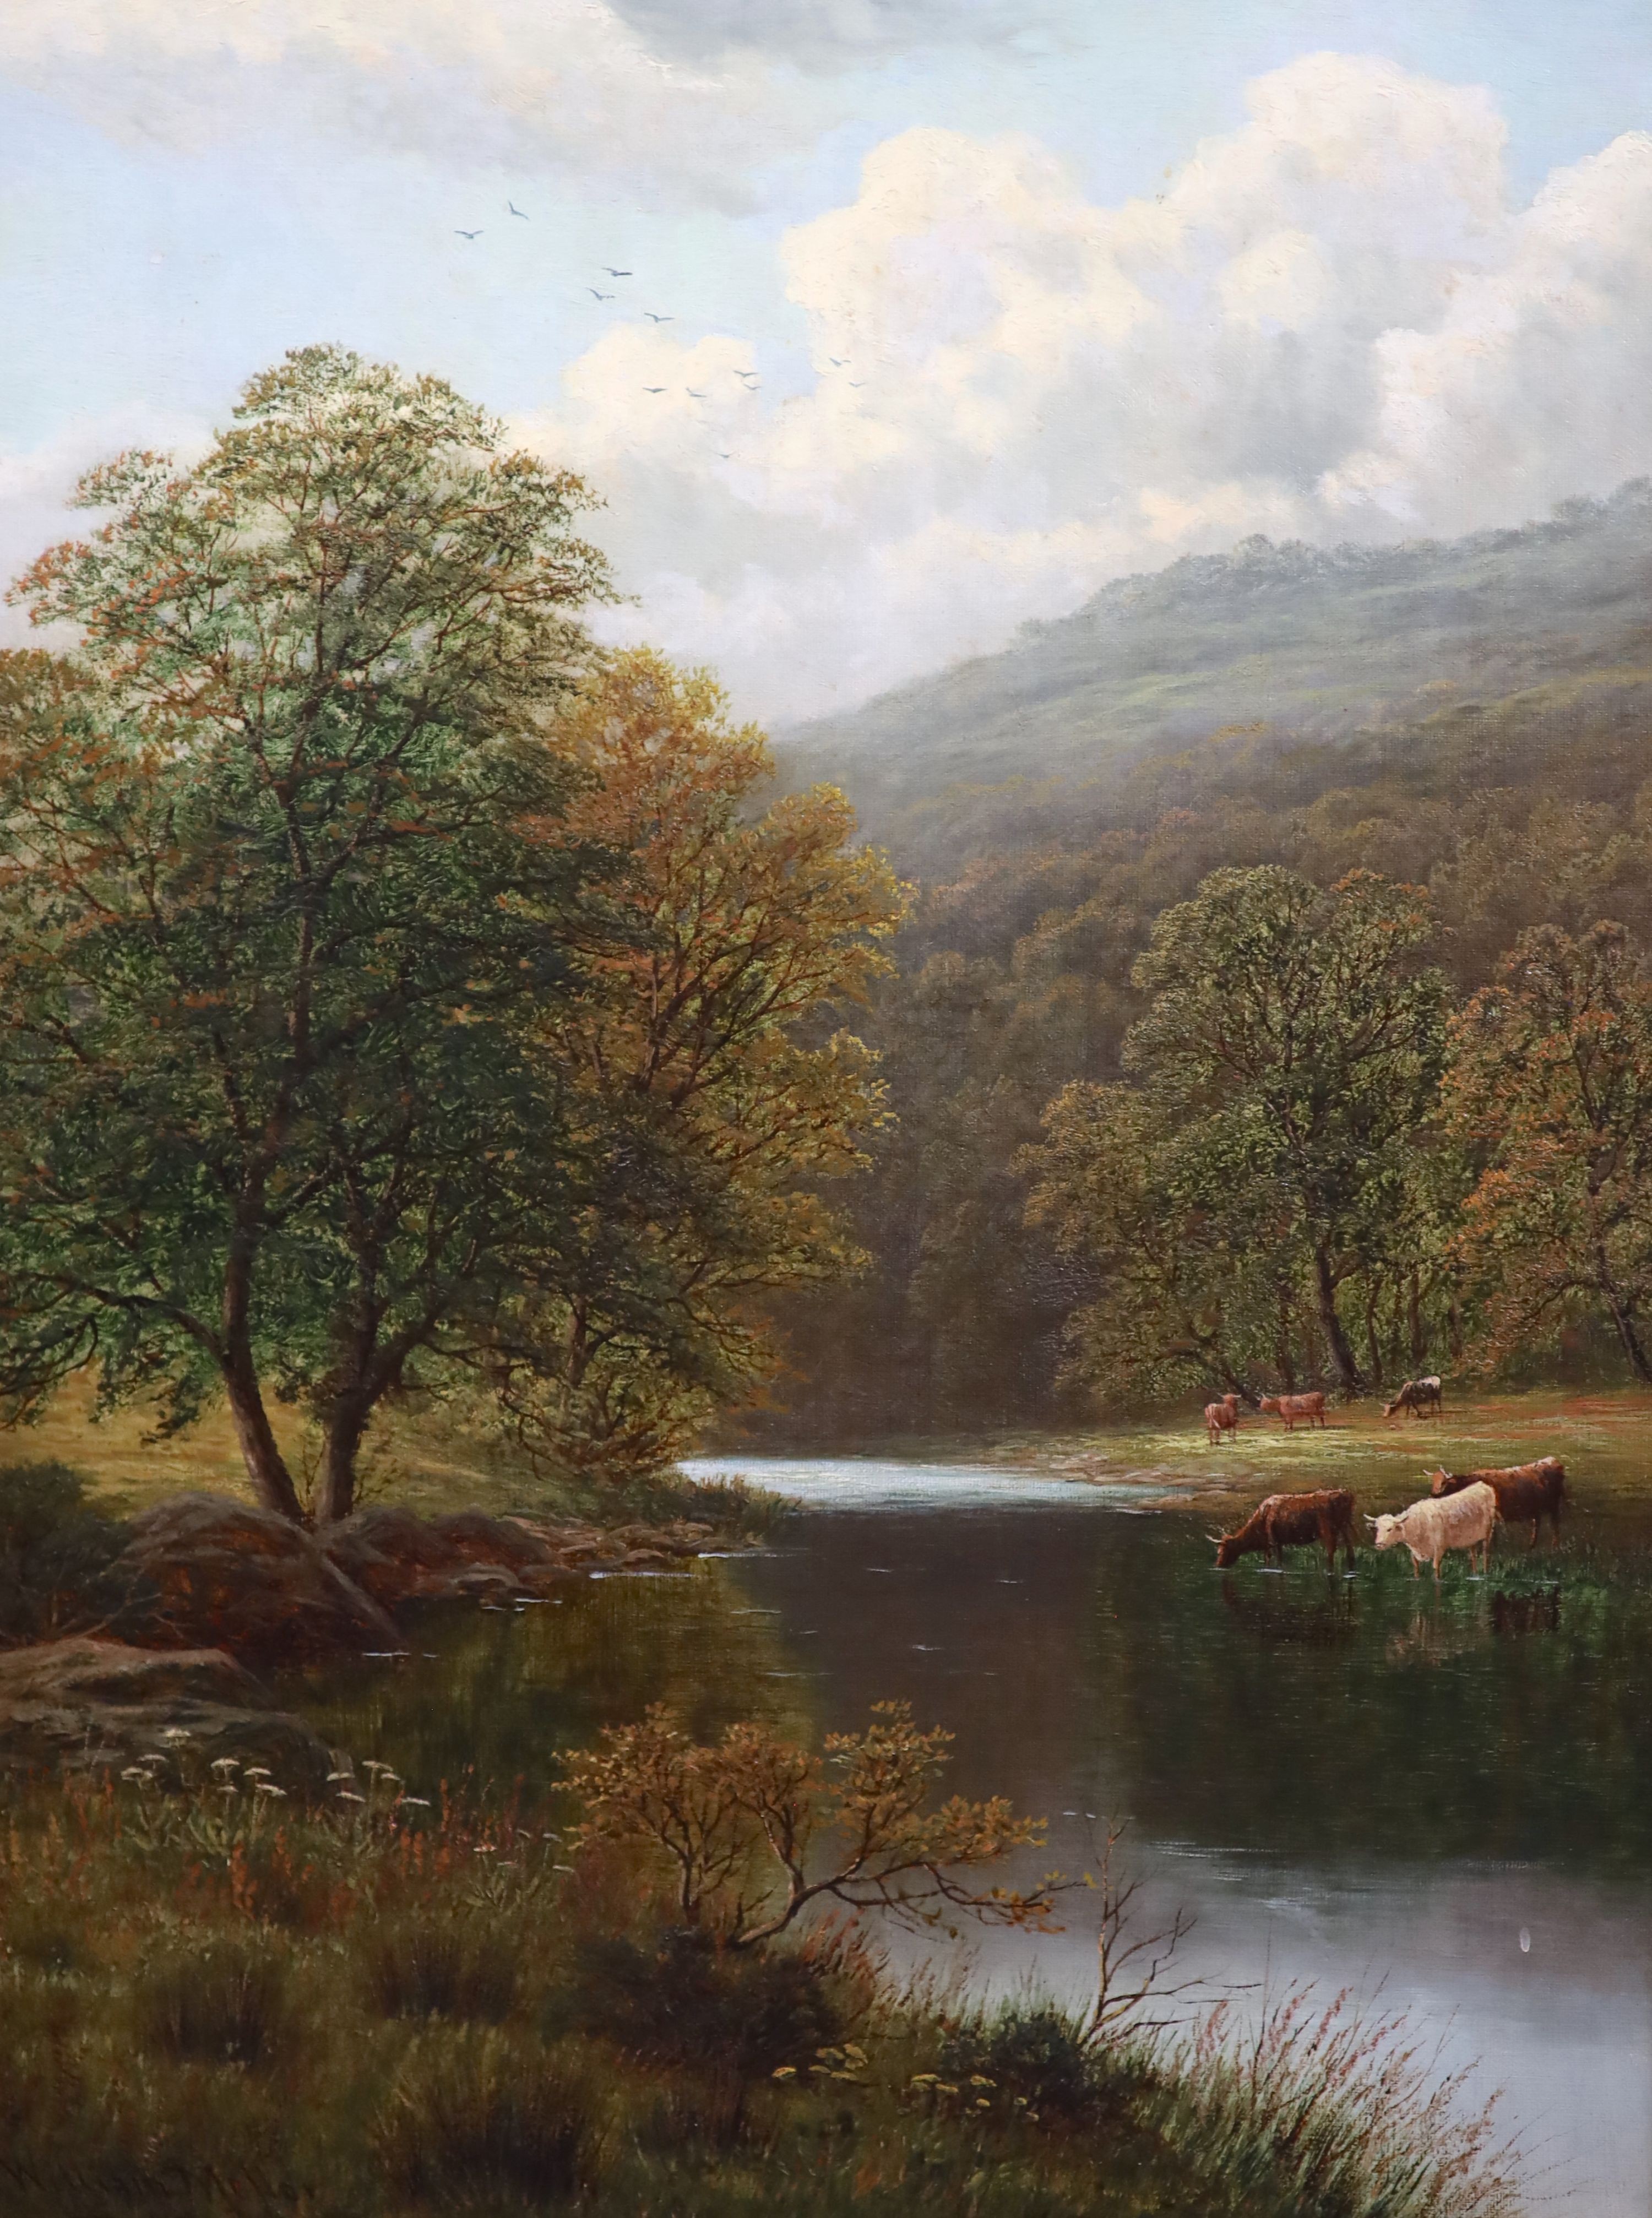 William Mellor (1851-1931), Wathenlath Beck, Borrowdale, Cumberland, Oil on canvas, 61 x 46cm.